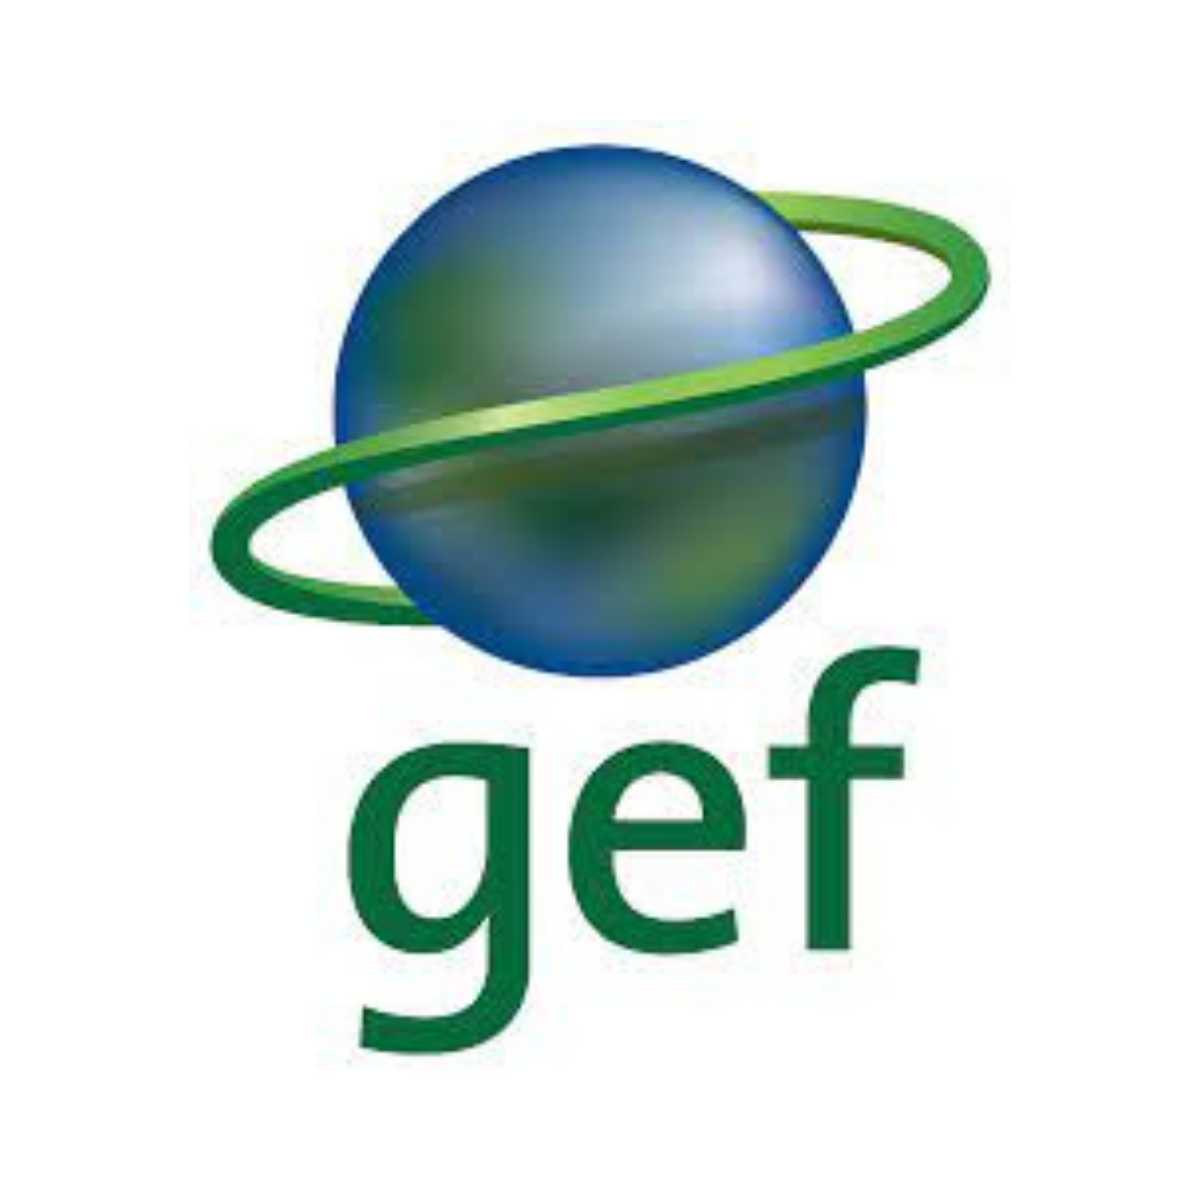 Global Environment Facility (GEF)